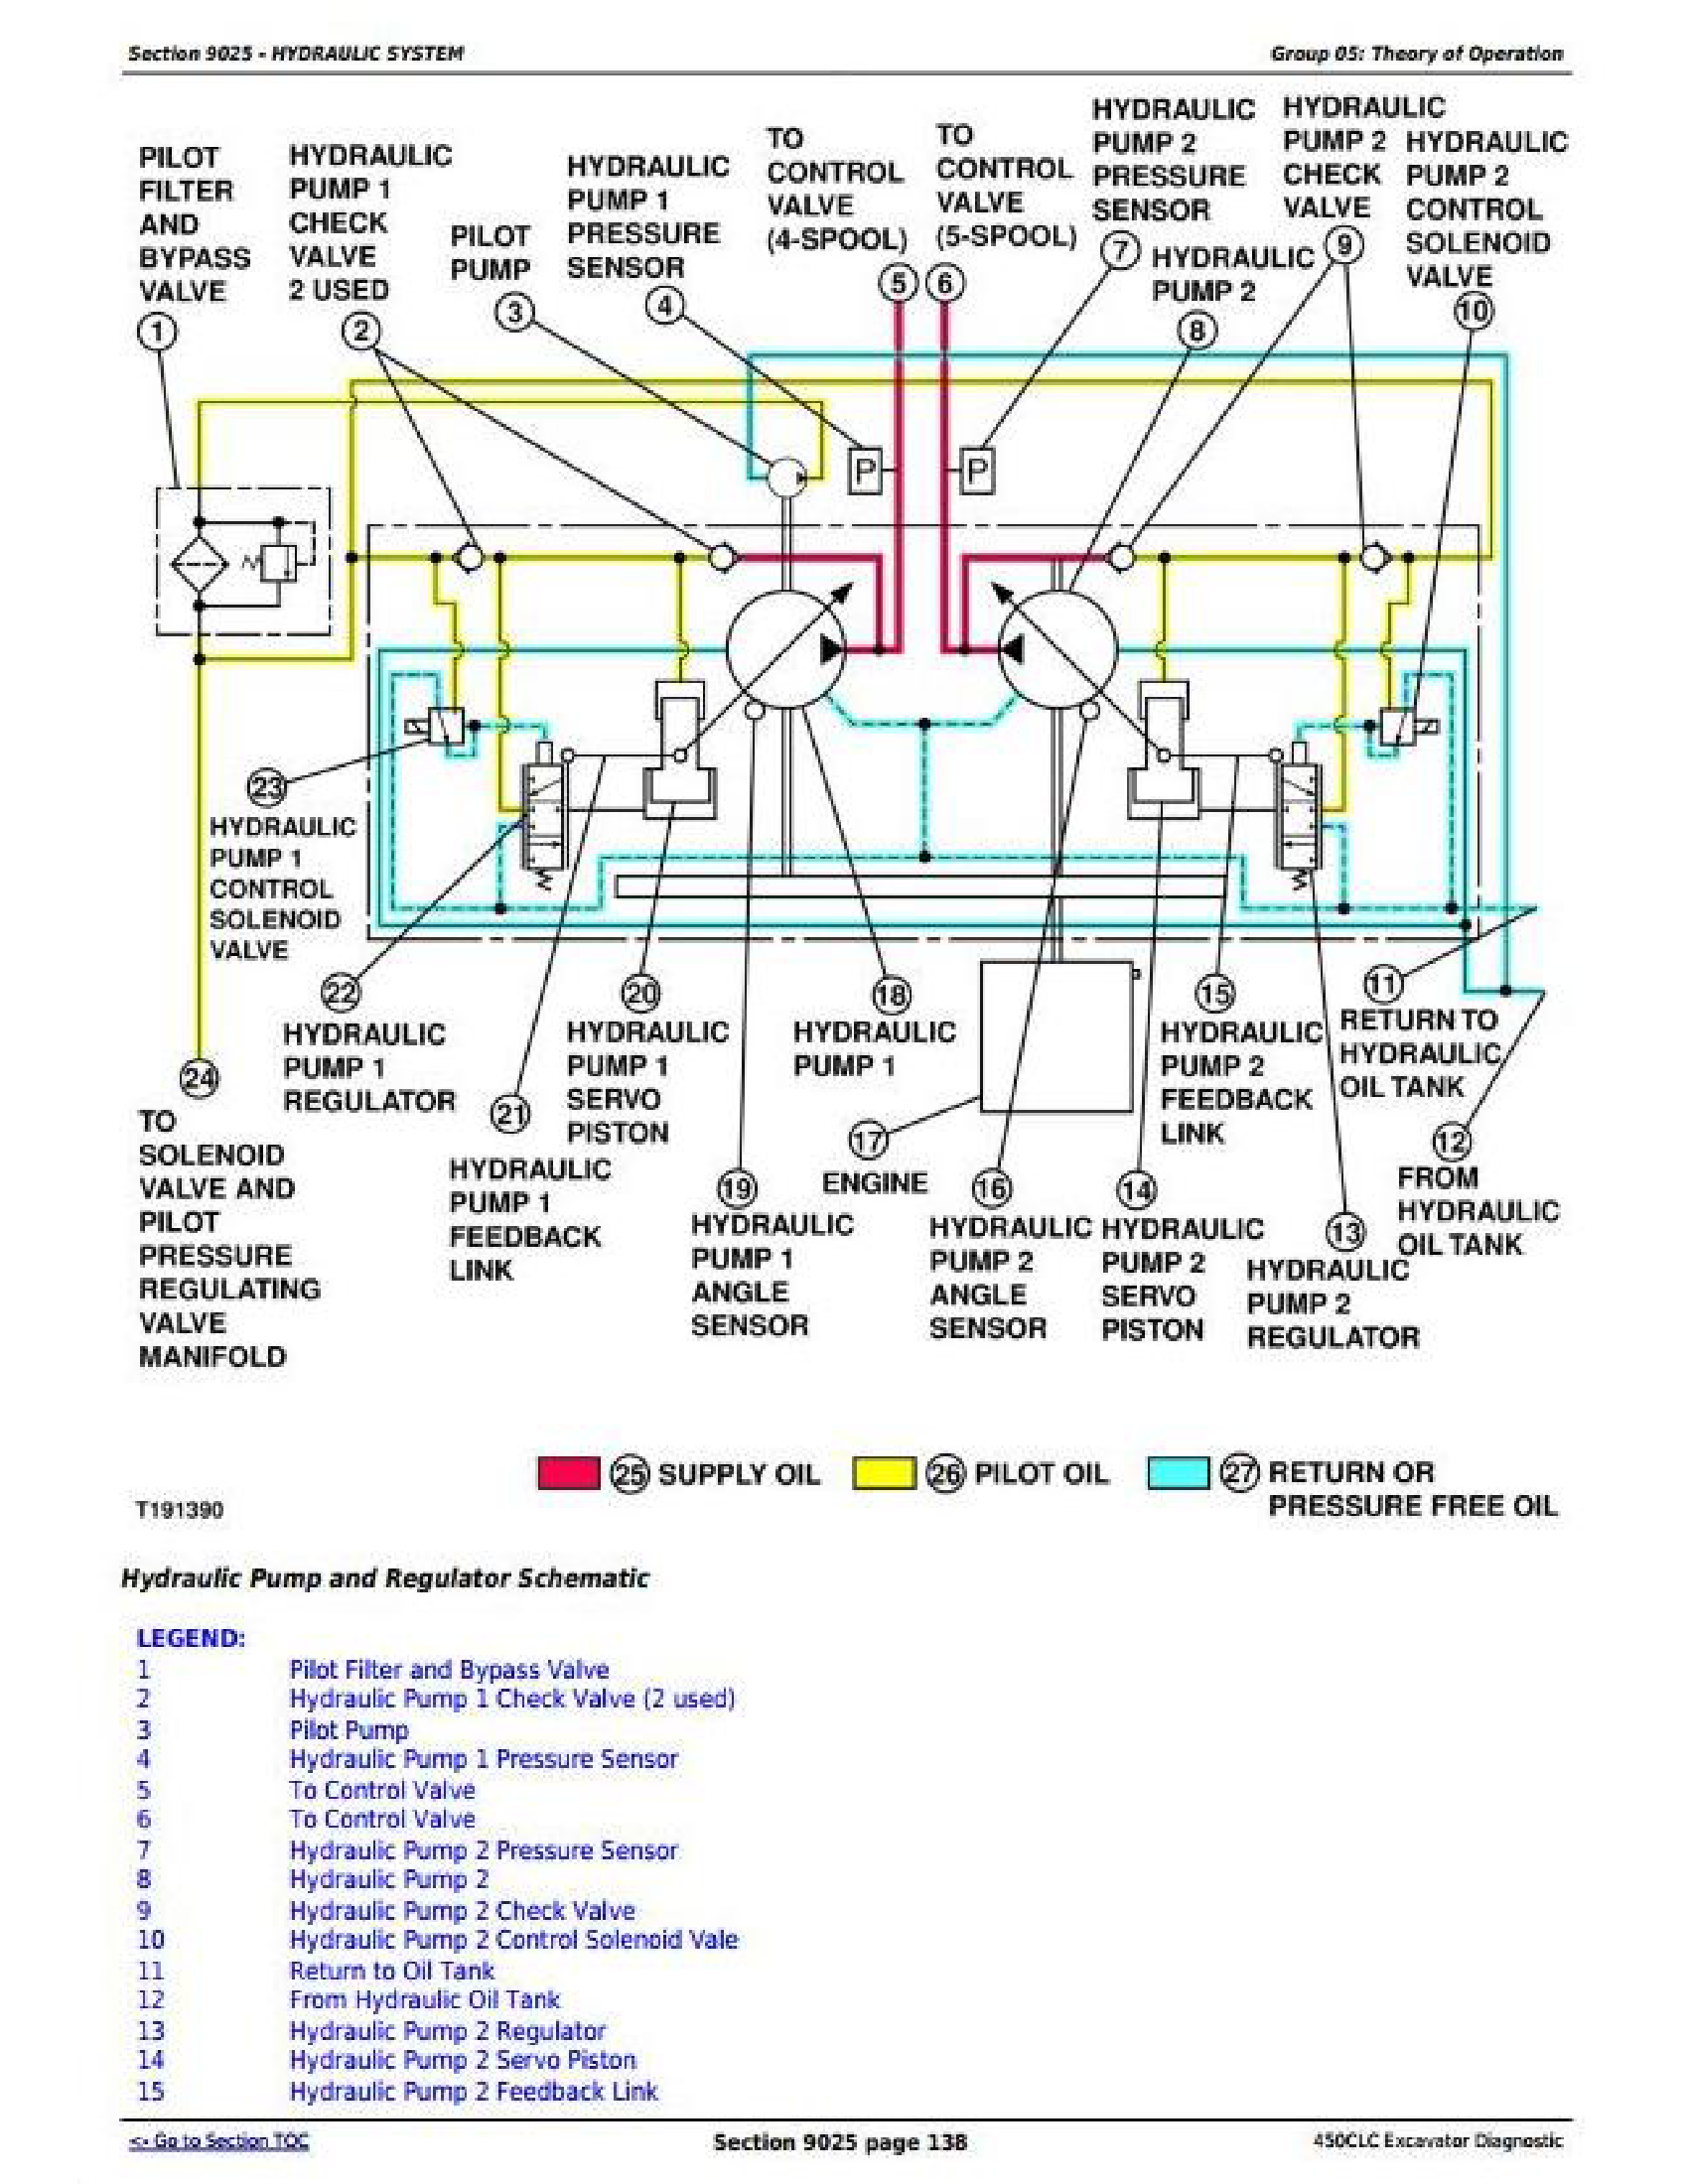 John Deere 450CLC manual pdf